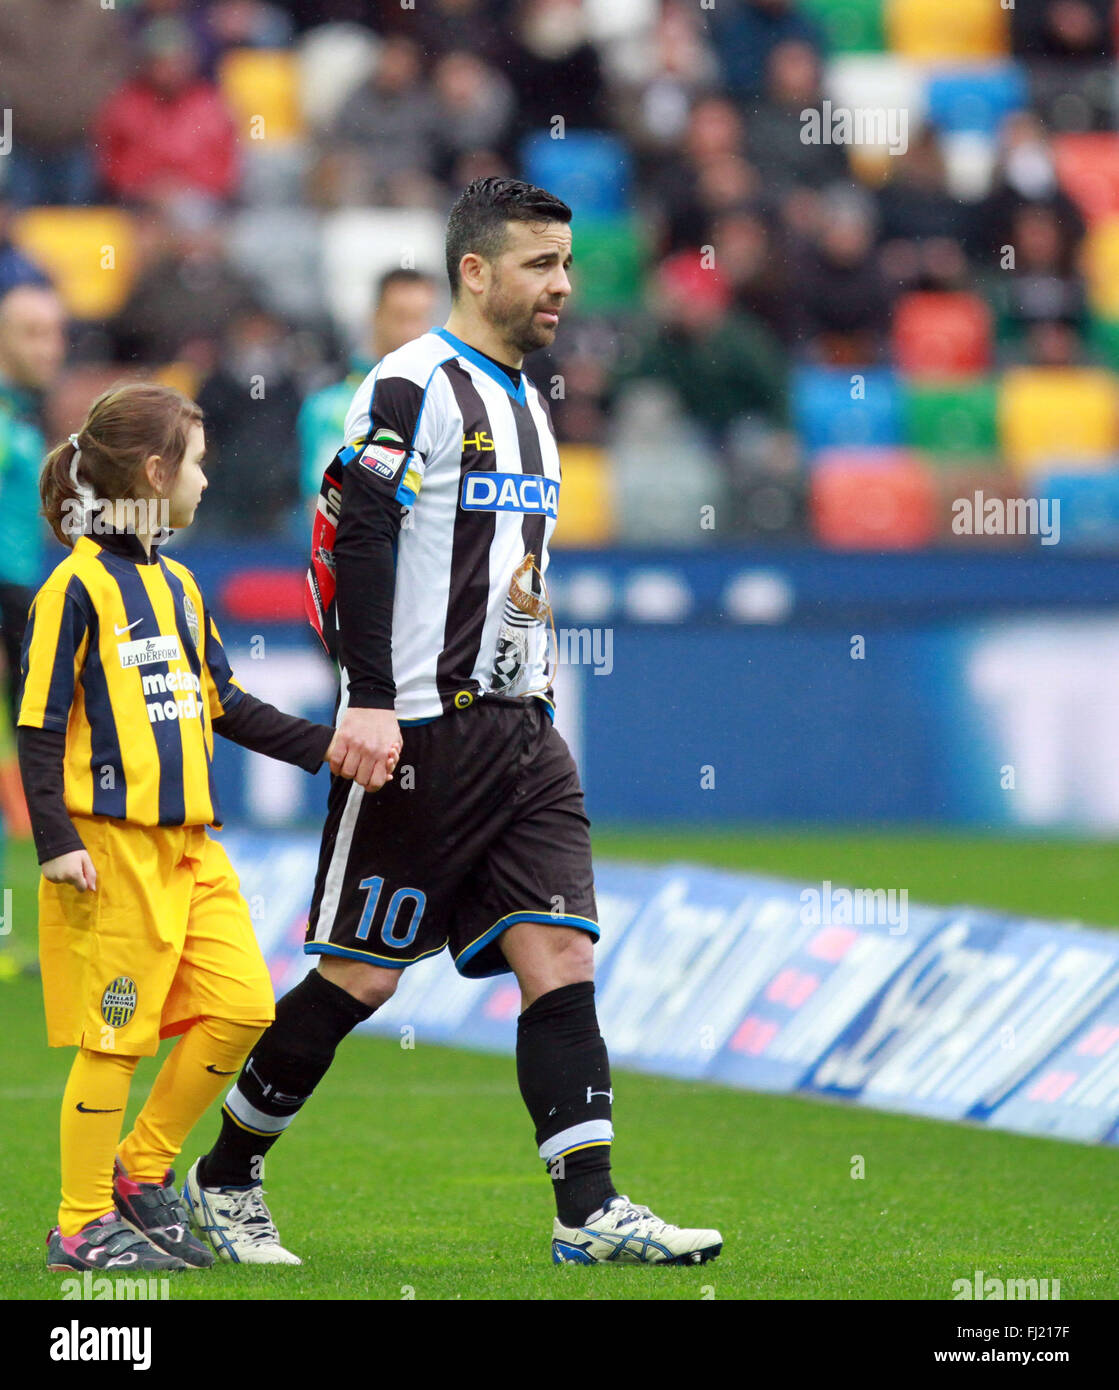 Antonio Di Natale.Udine Italy 28th Feb 2016 Udinese S Forward Antonio Di Natale Stock Photo Alamy